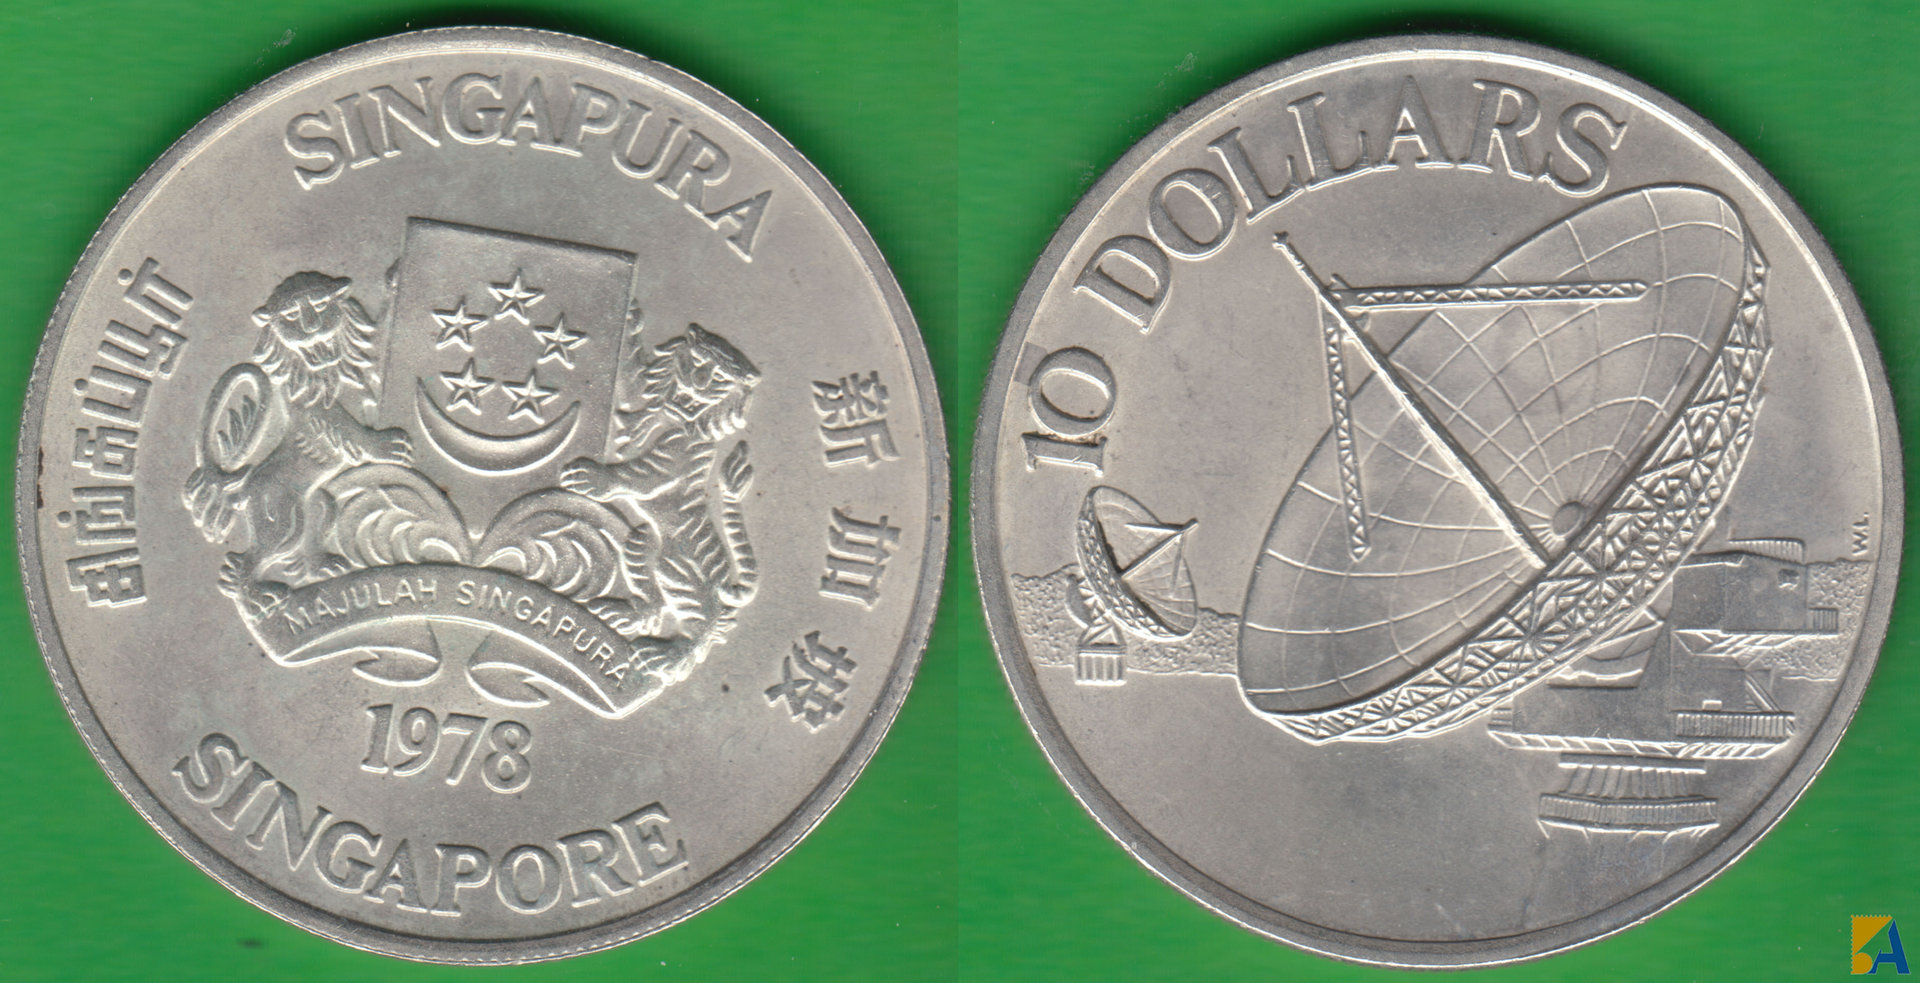 SINGAPUR - SINGAPORE. 10 DOLARES (DOLLARS) DE 1978. PLATA 0.500.